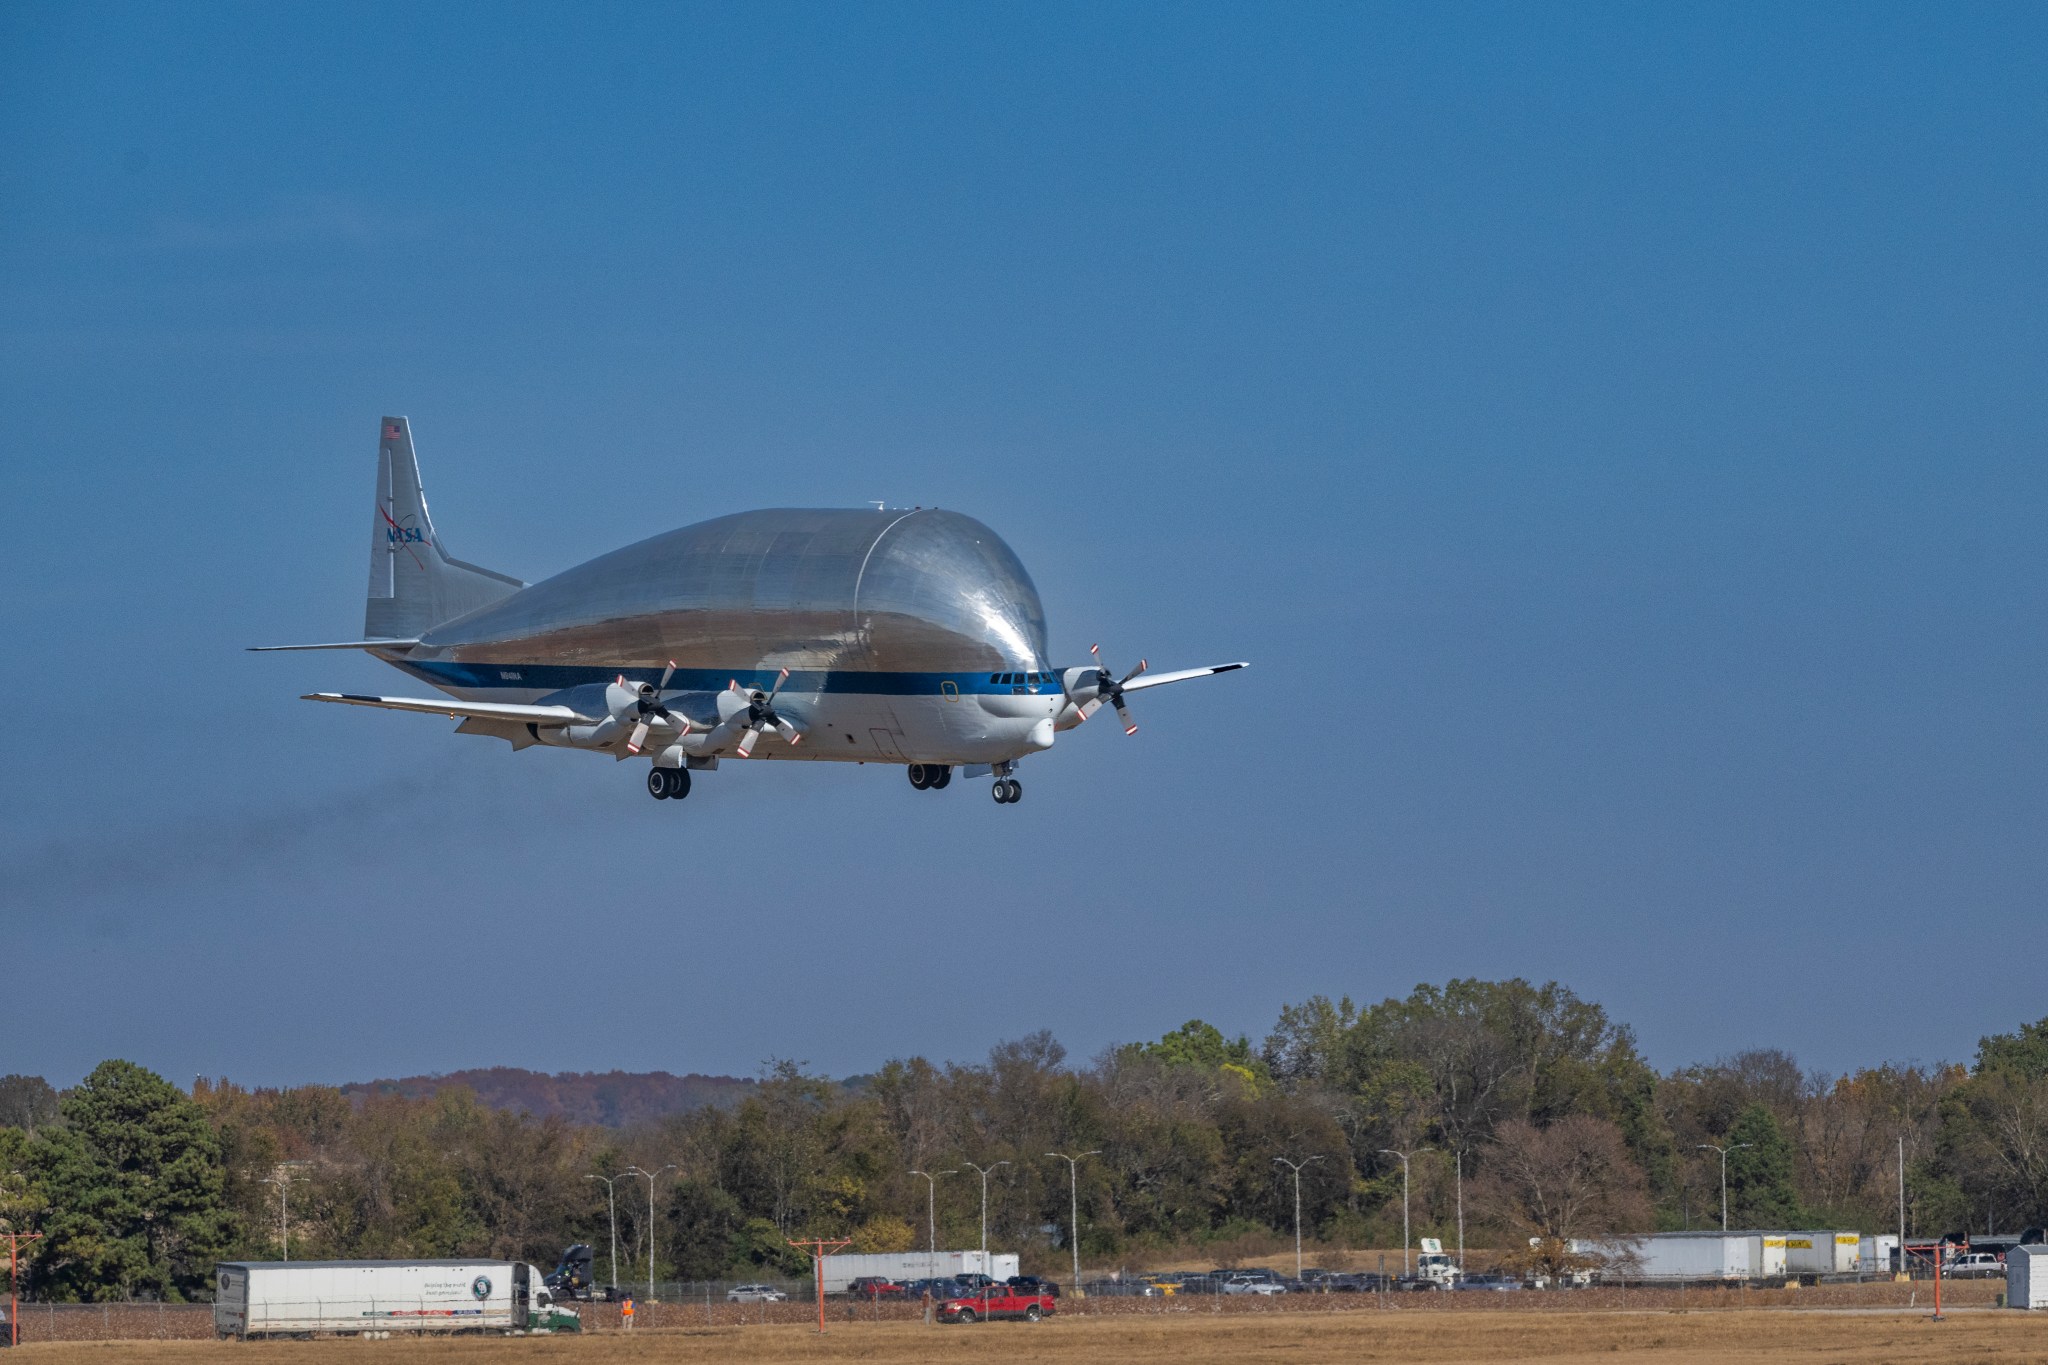 The large super guppy plane flies into Huntsville, Alabama for a landing.